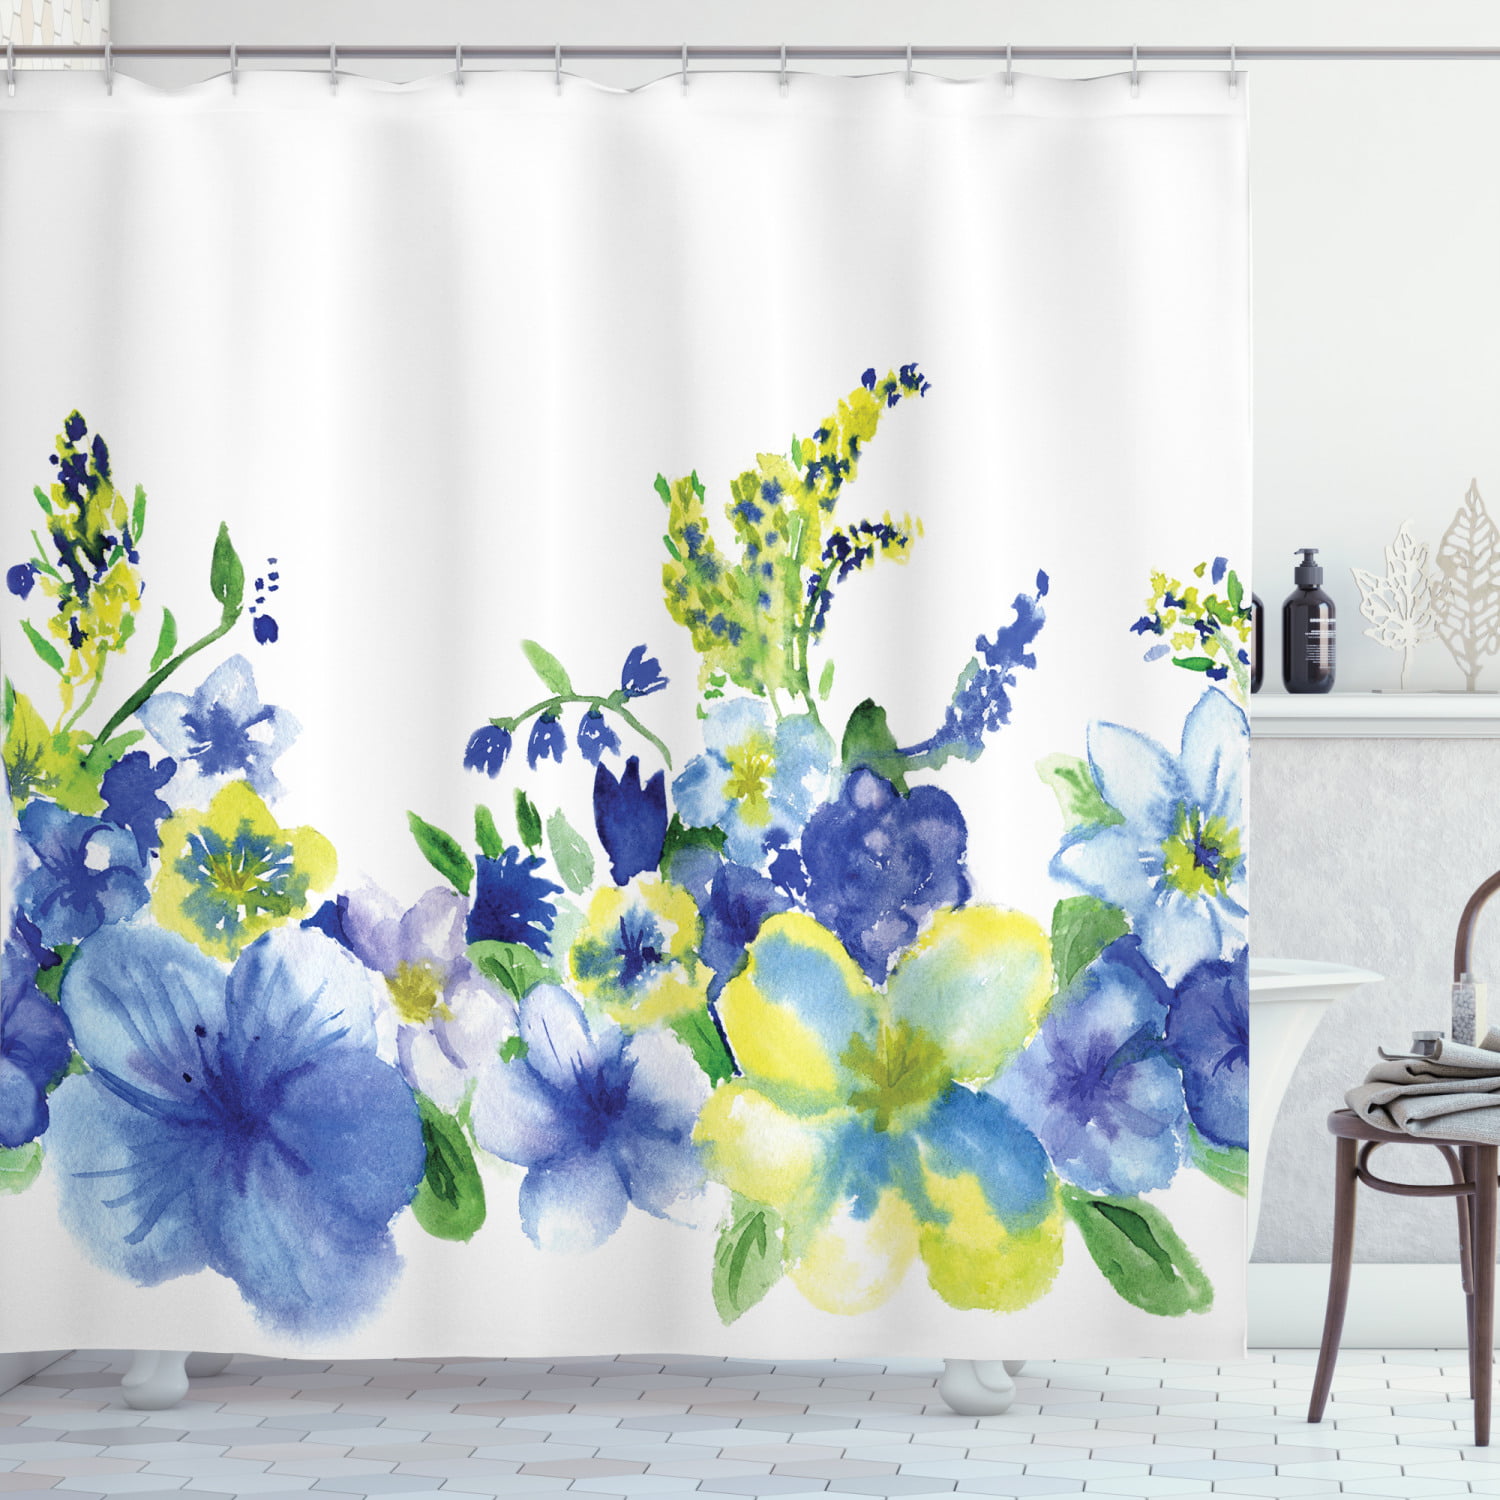 Waterproof Fabric Shower Curtain Set Spring Theme Watercolor Blooming Flowers 